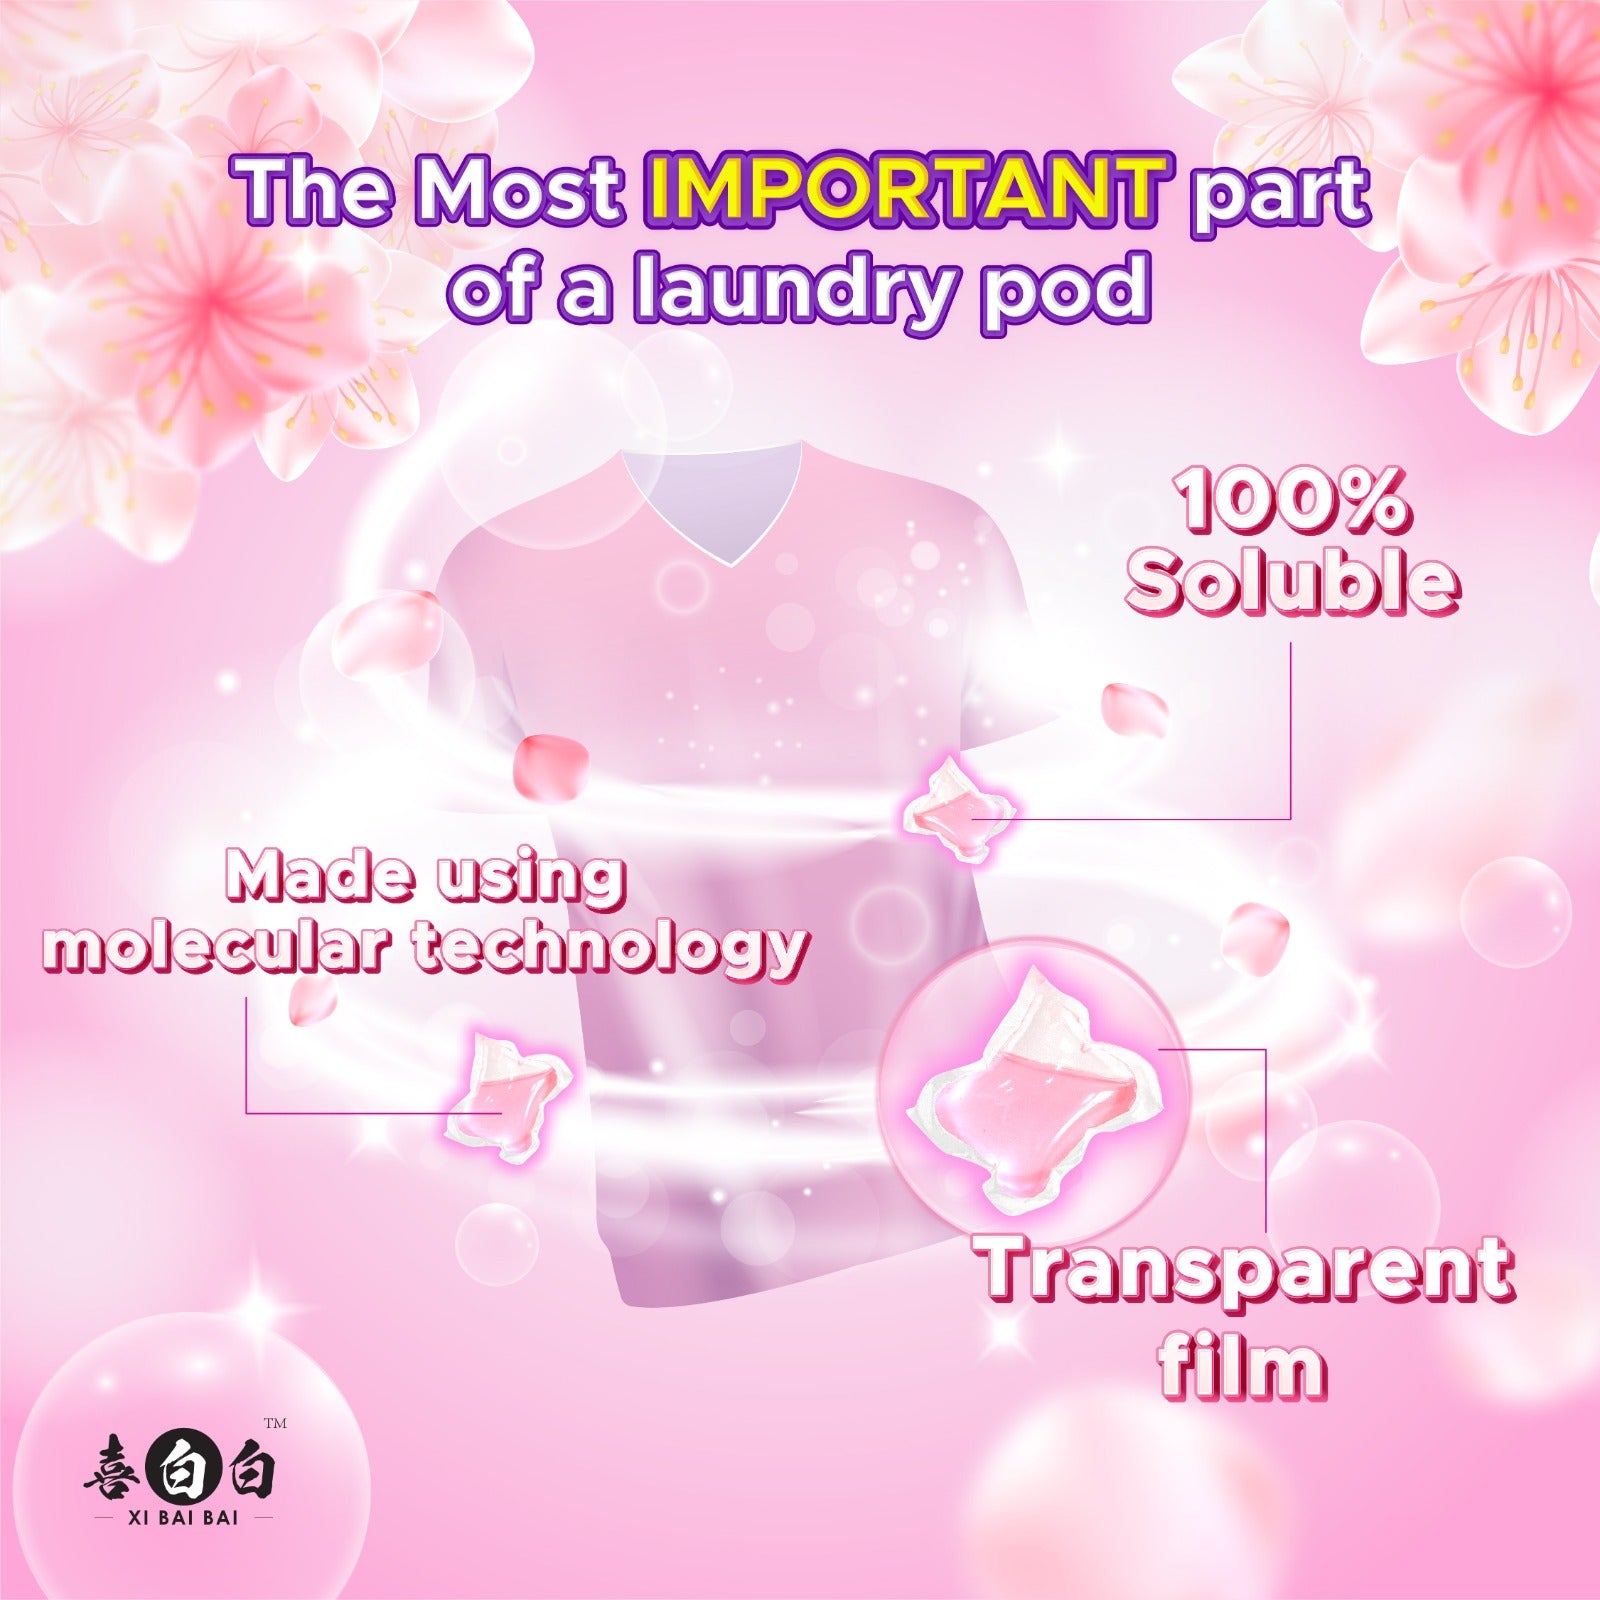 Xibaibai Super Laundry Capsule『SAKURA SCENT』 (50 Pcs x 8g/400g)